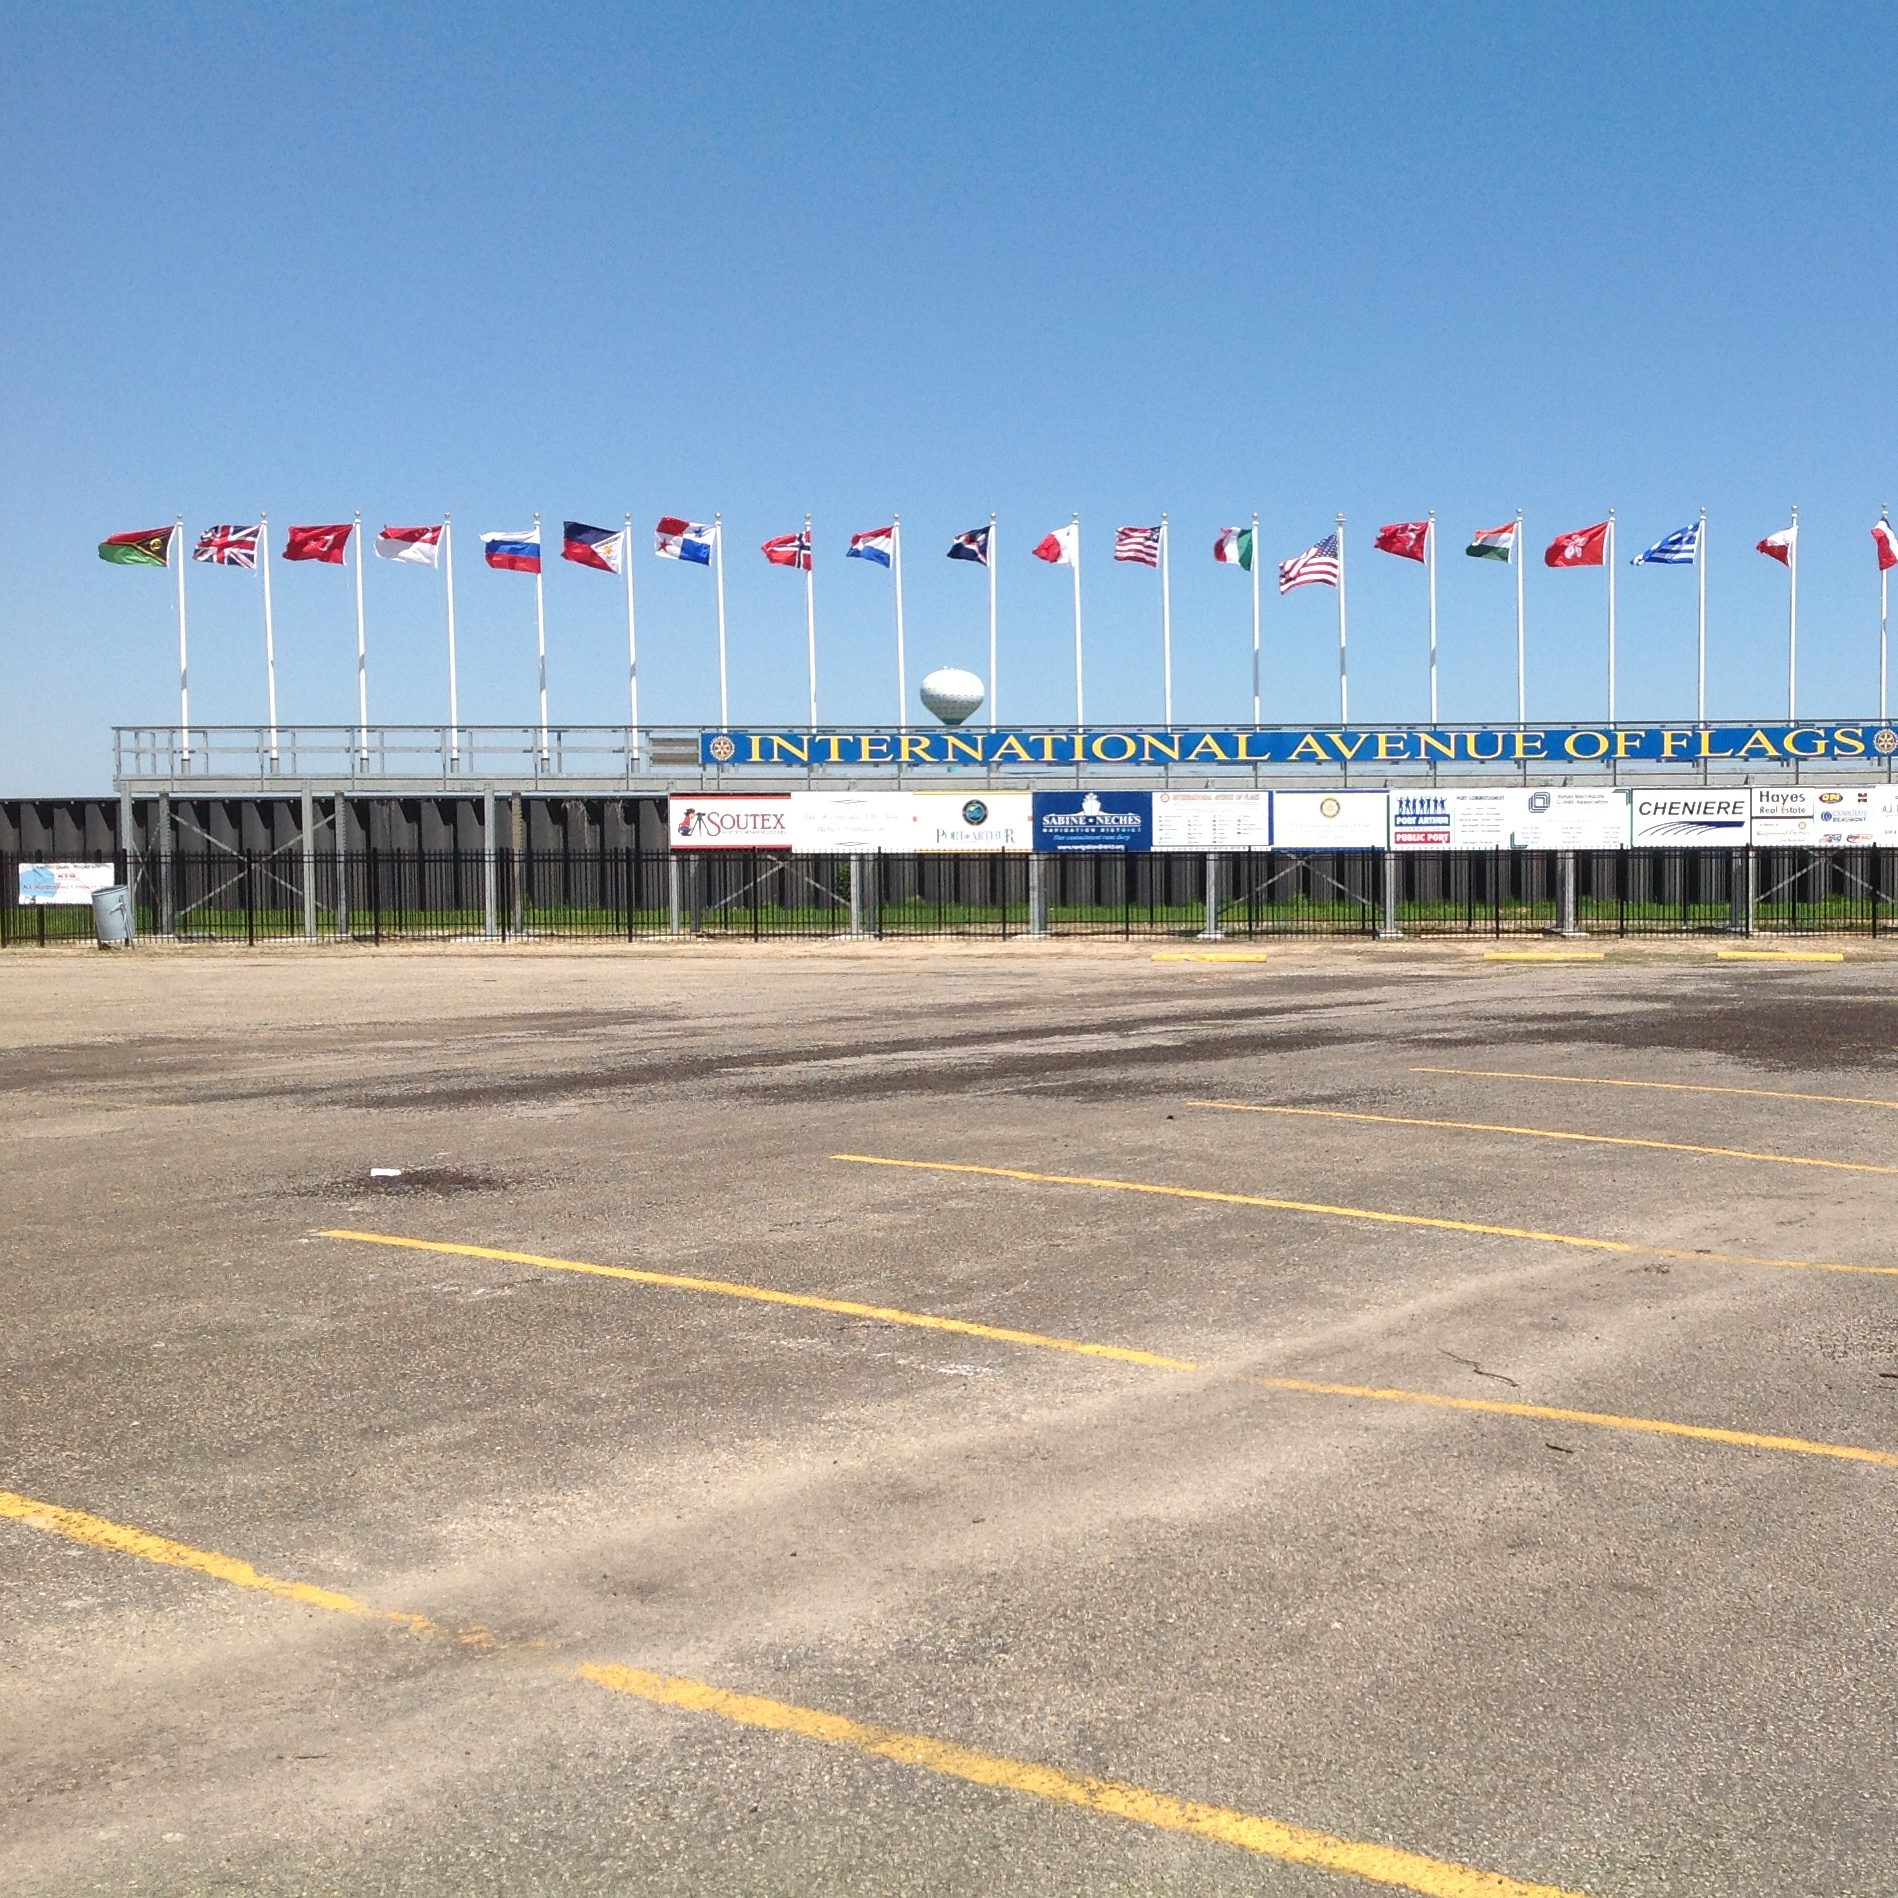 International Avenue of Flags | Port Arthur, Texas